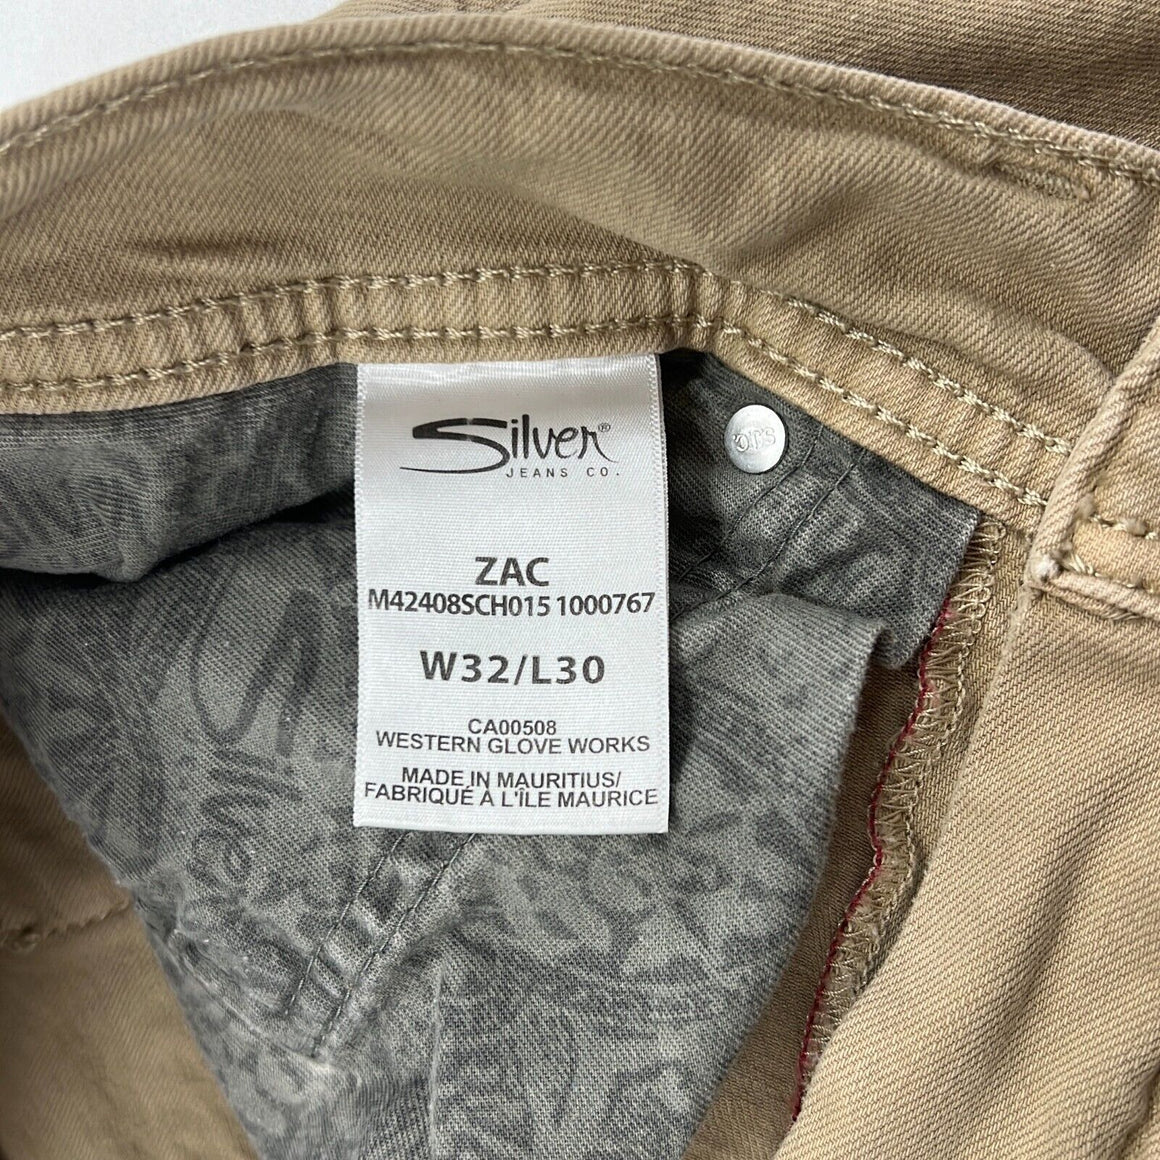 Maurices Size 7/8 Regular Jeans Design on Pockets 32 1/2 Inseam